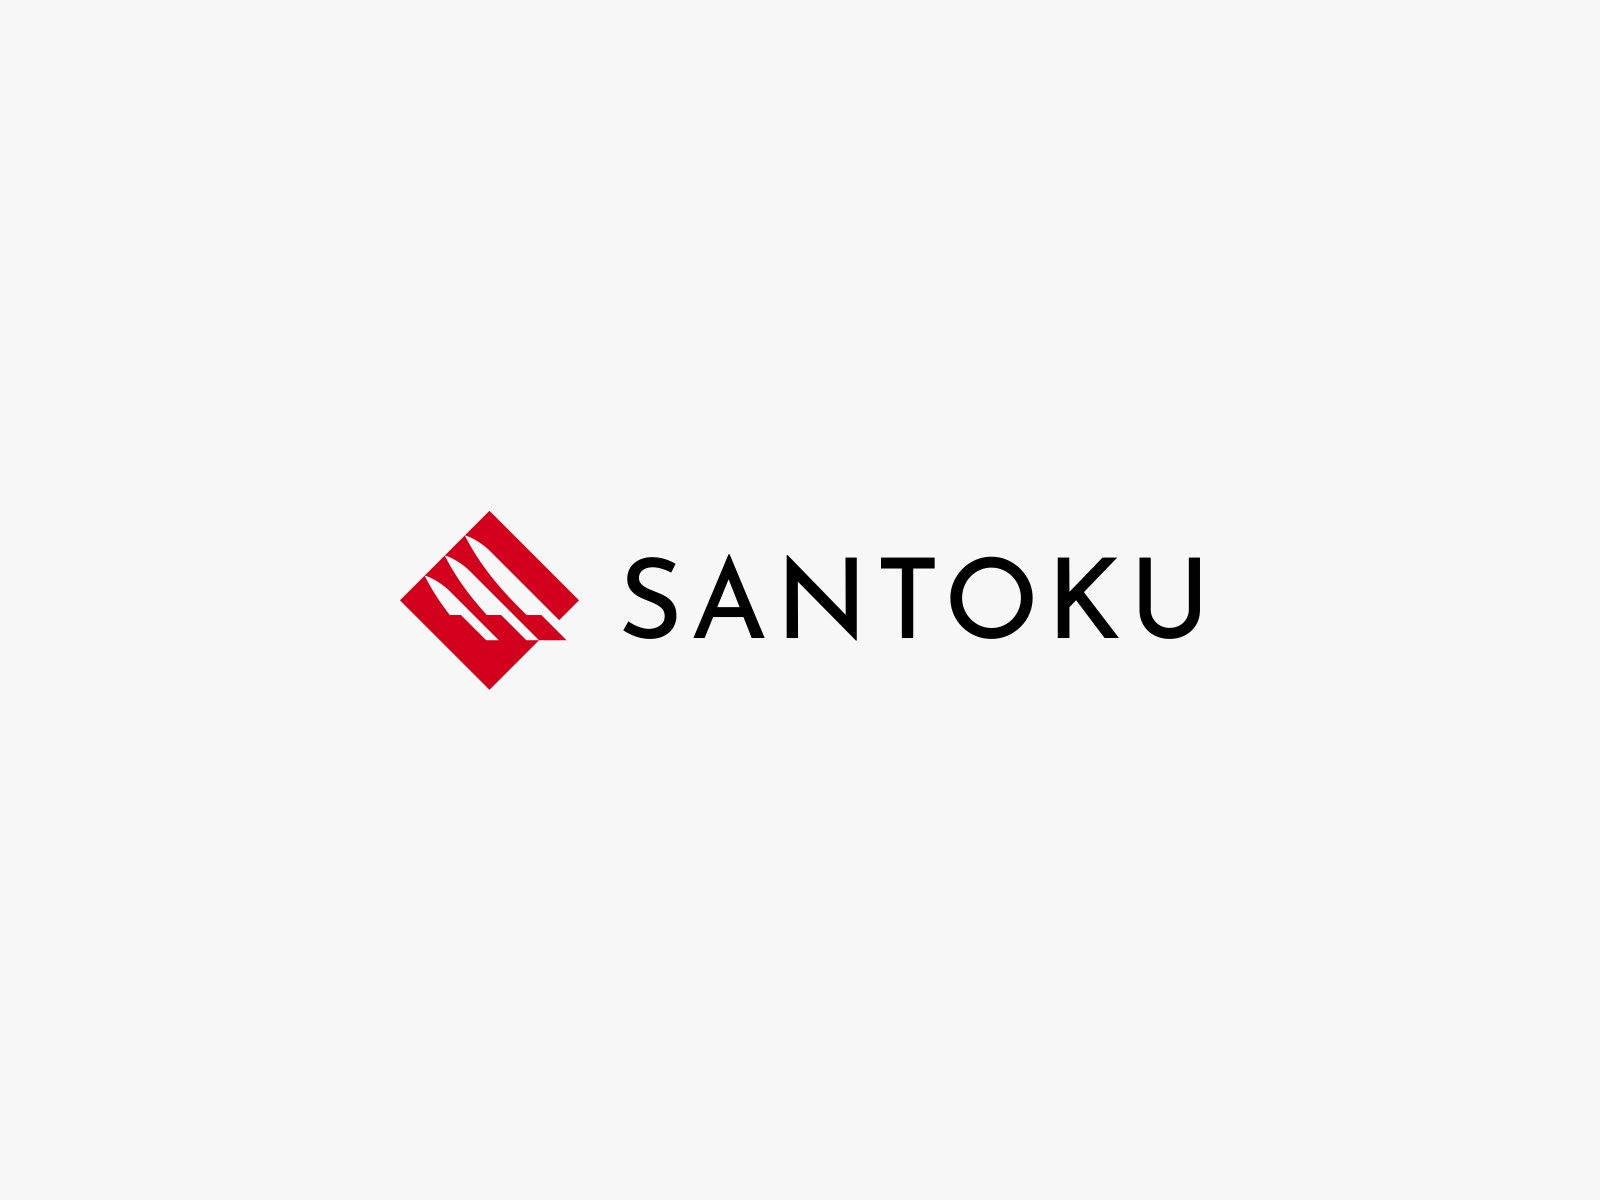 Santoku by Catur Argi on Dribbble